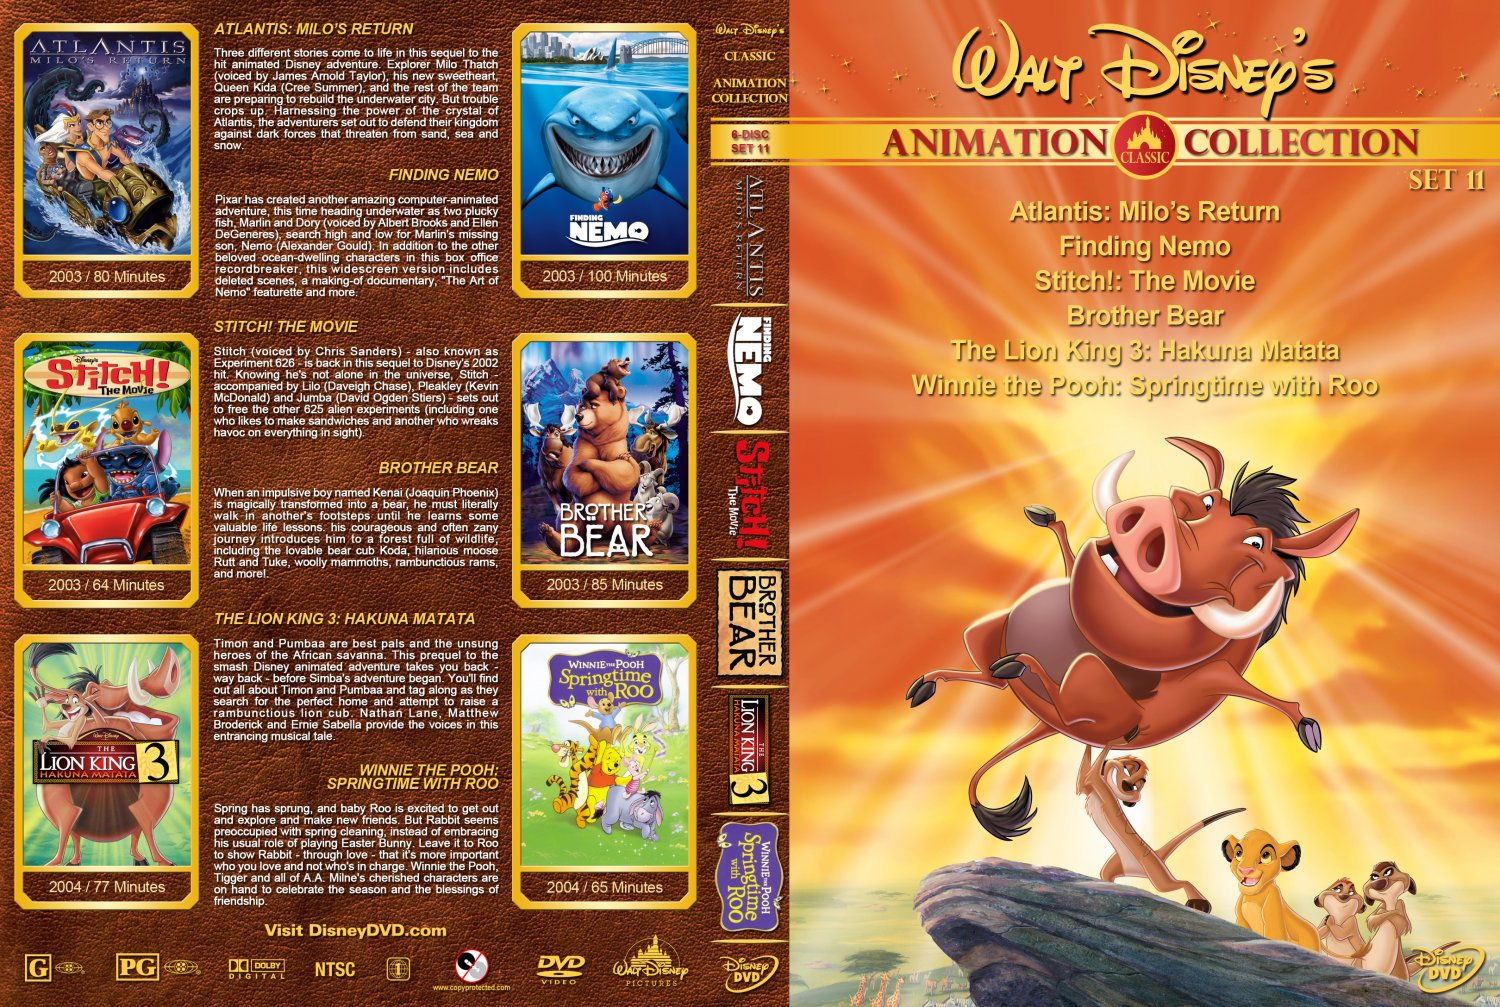 Walt Disney S Classic Animation Collection Set 11